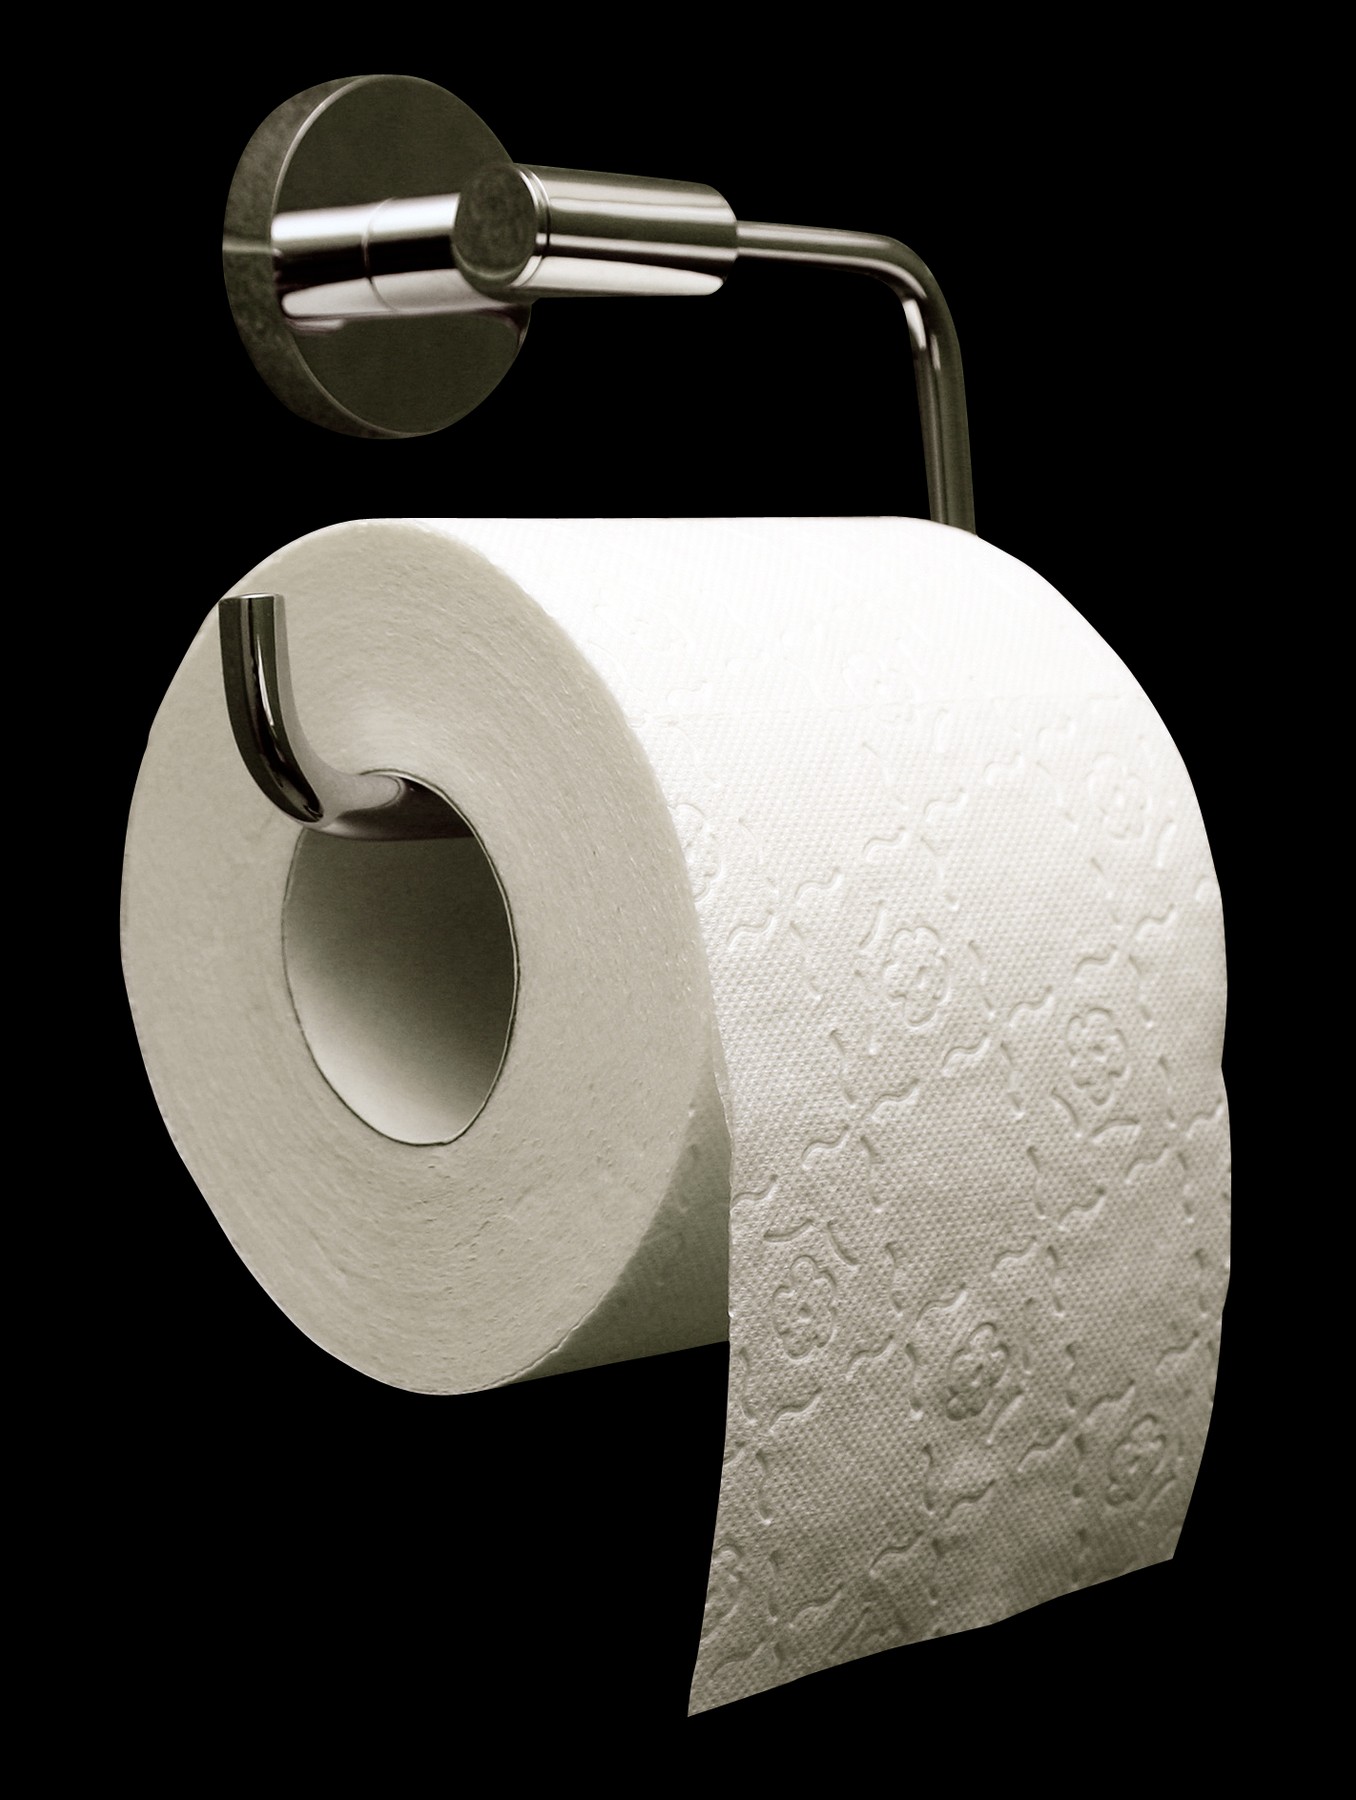 purepng.com-toilet-paper-rollobjectstoilet-paper-rollpaper-object-roll-toilet-631522325974lguk4.png